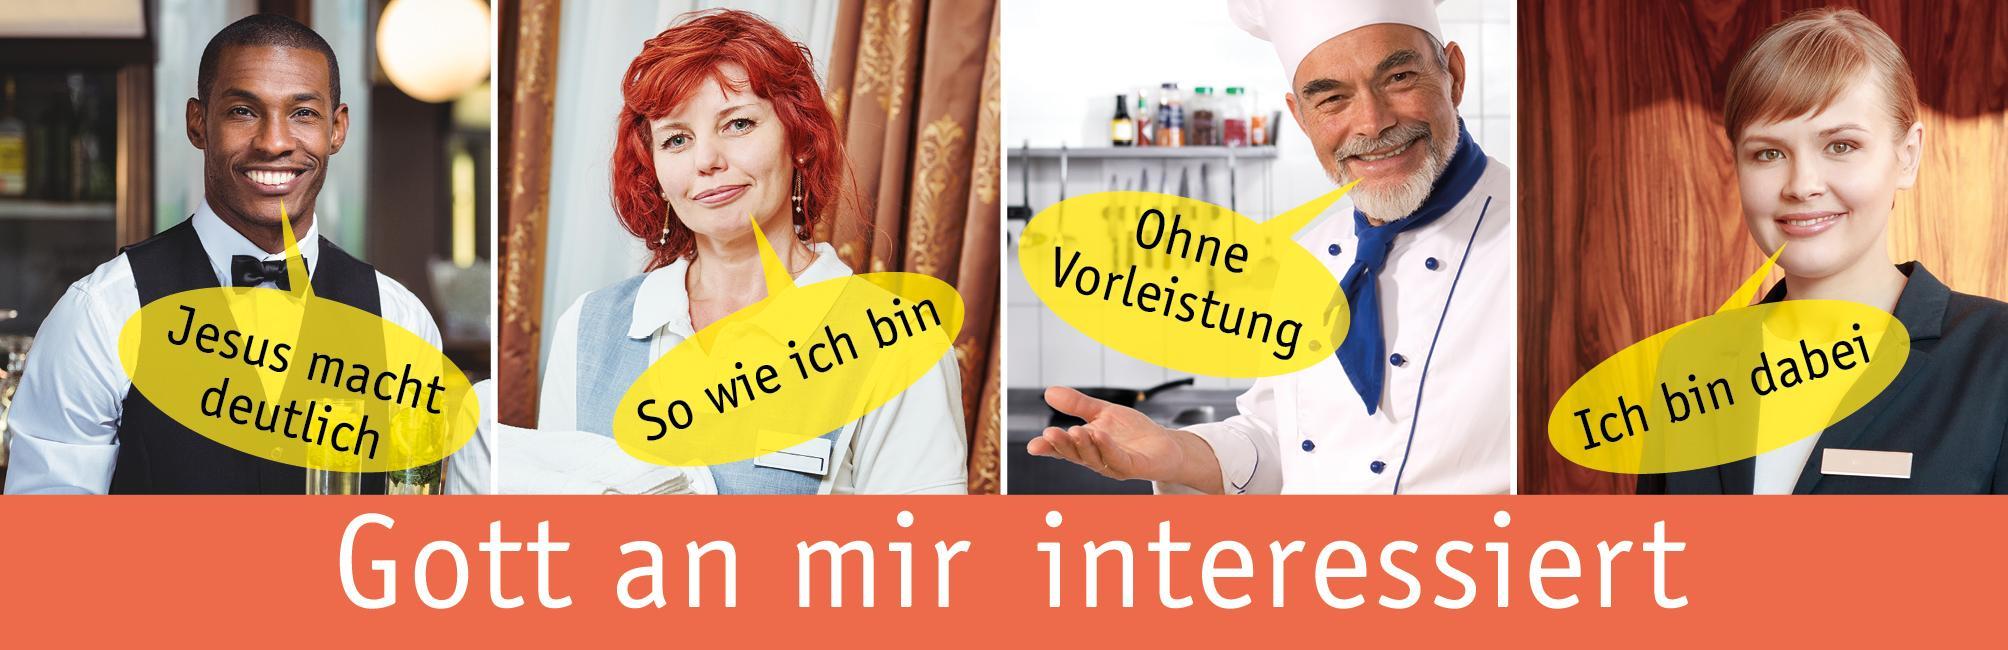 Kampagne "Gott an mir interessiert", Quelle: Beate Reichel, diekreation, werbung + kommunikationsdesign